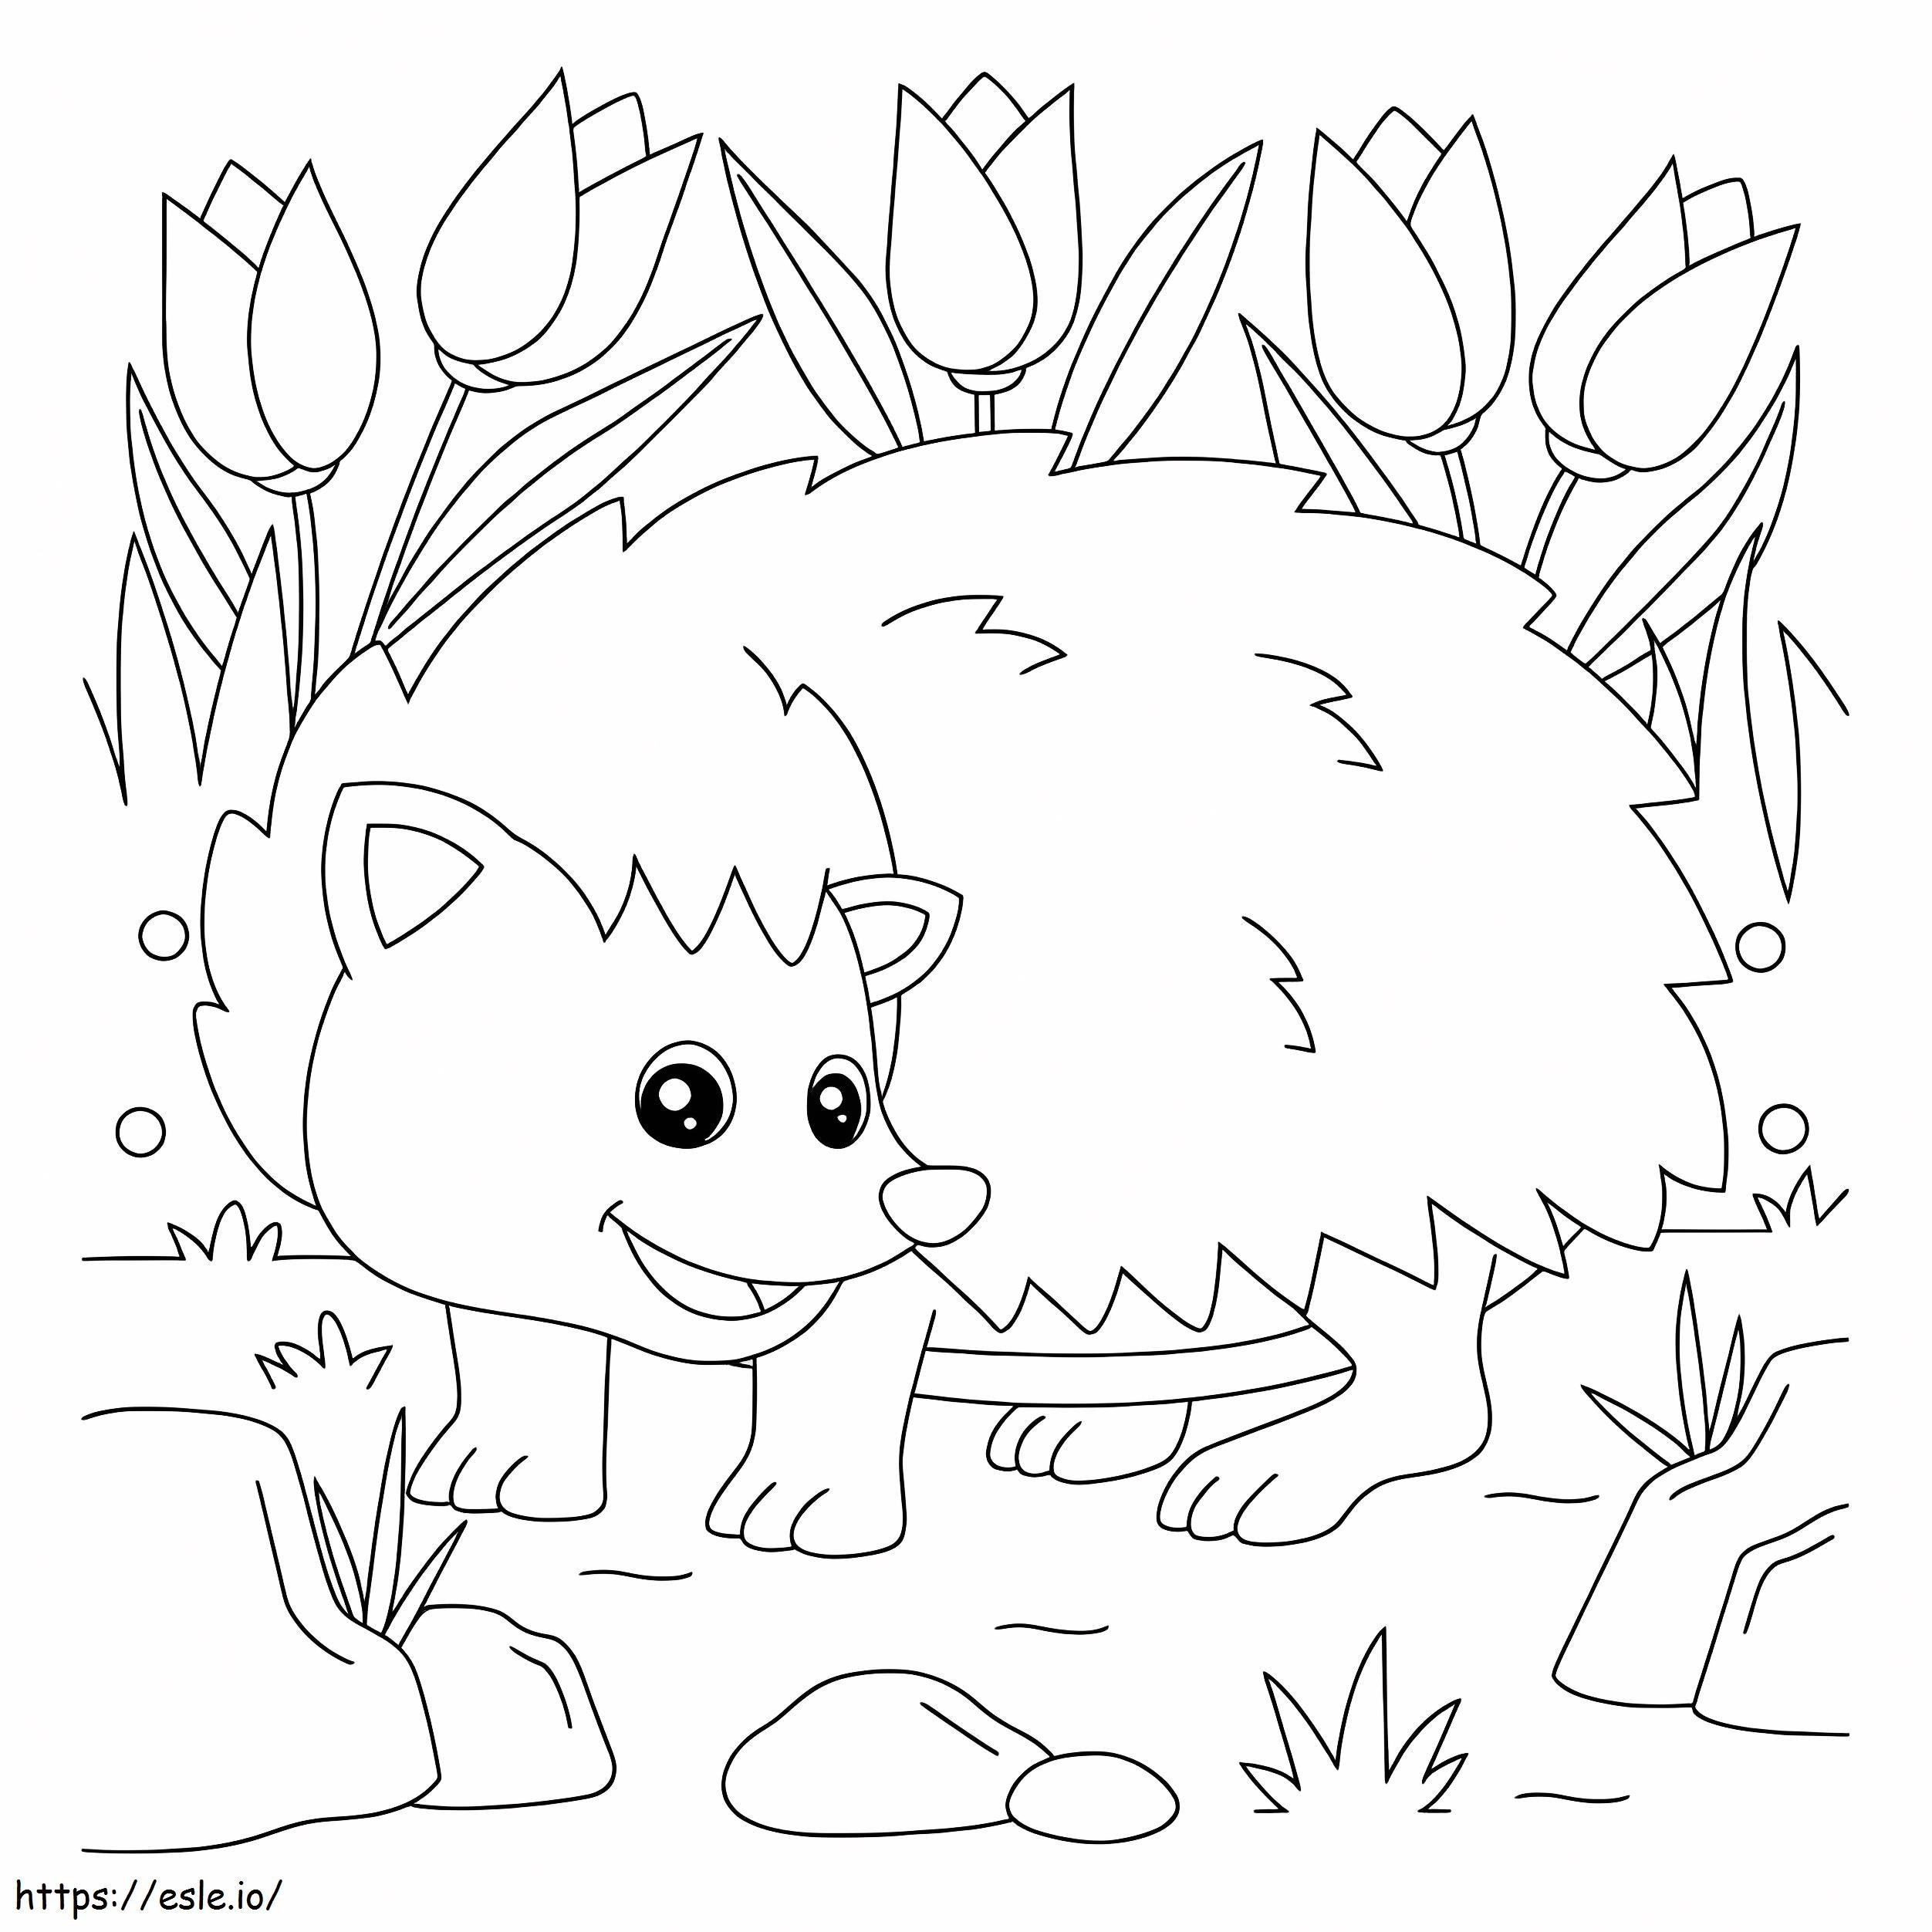 Good Hedgehog coloring page